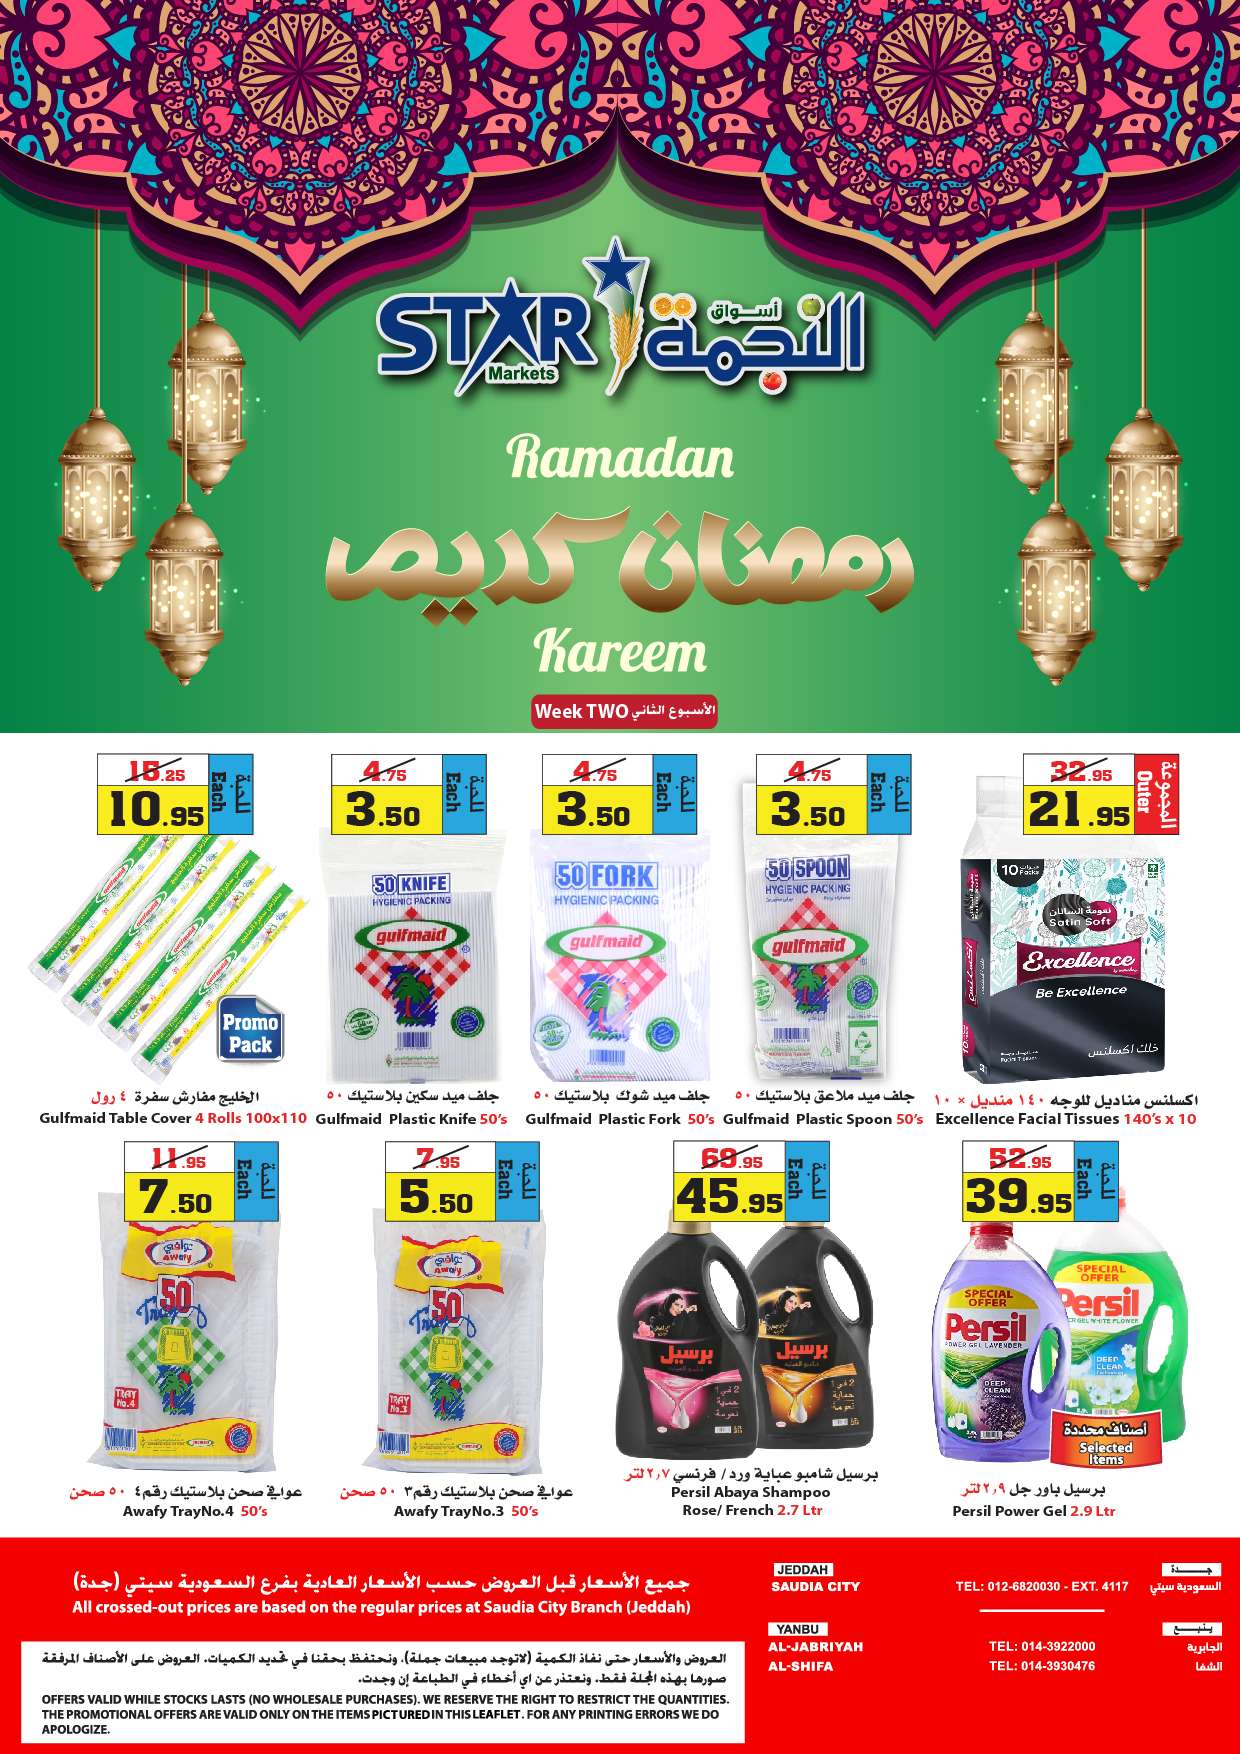 cZTl02 - عروض رمضان 2024 : عروض أسواق النجمة الأسبوعية صفحة واحدة الخميس 14 مارس 2024